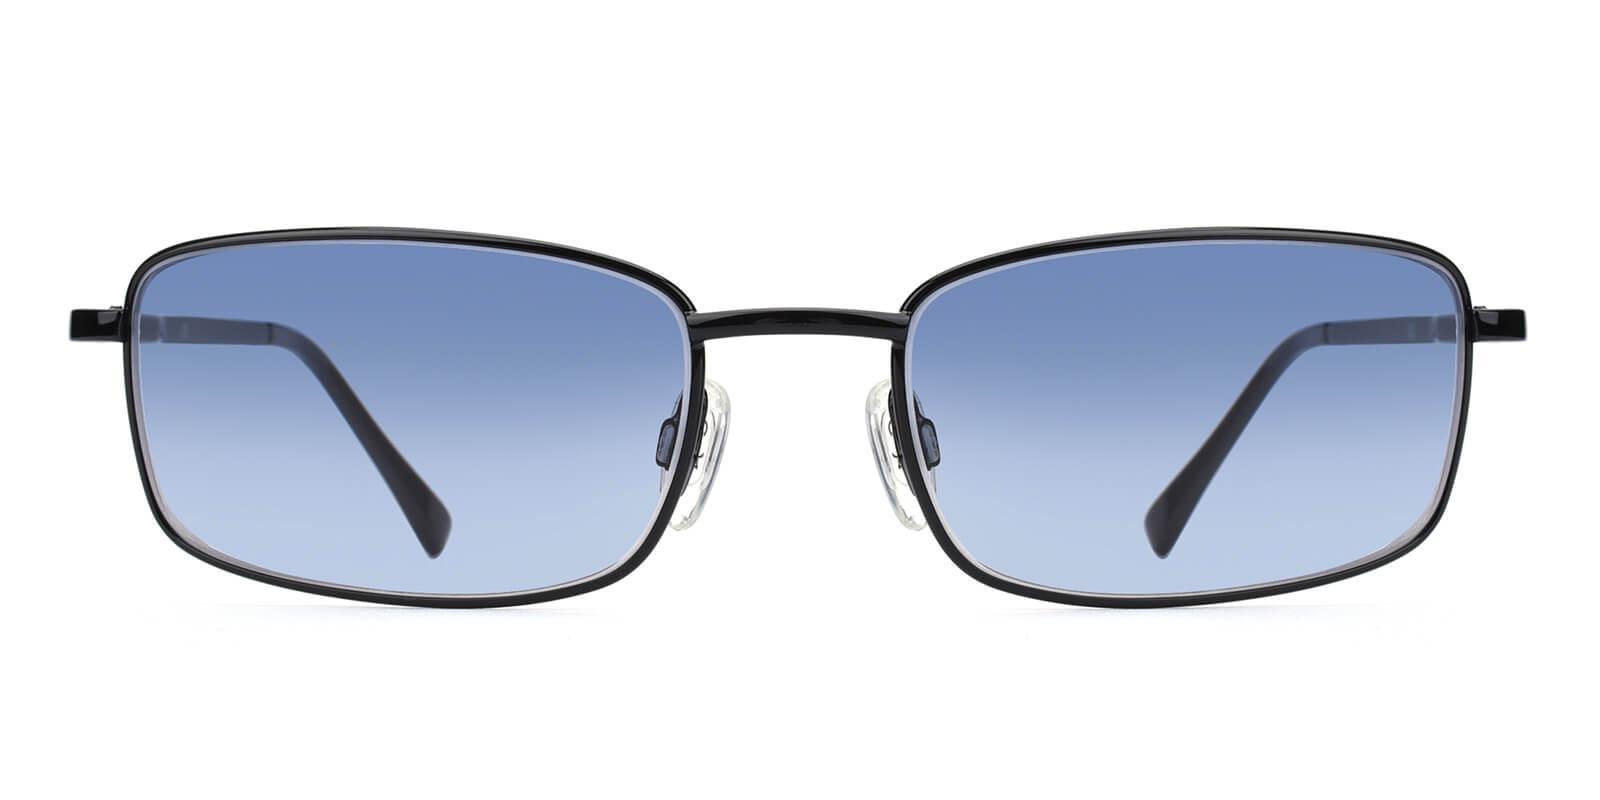 Sam Black Metal SpringHinges , Sunglasses , NosePads Frames from ABBE Glasses